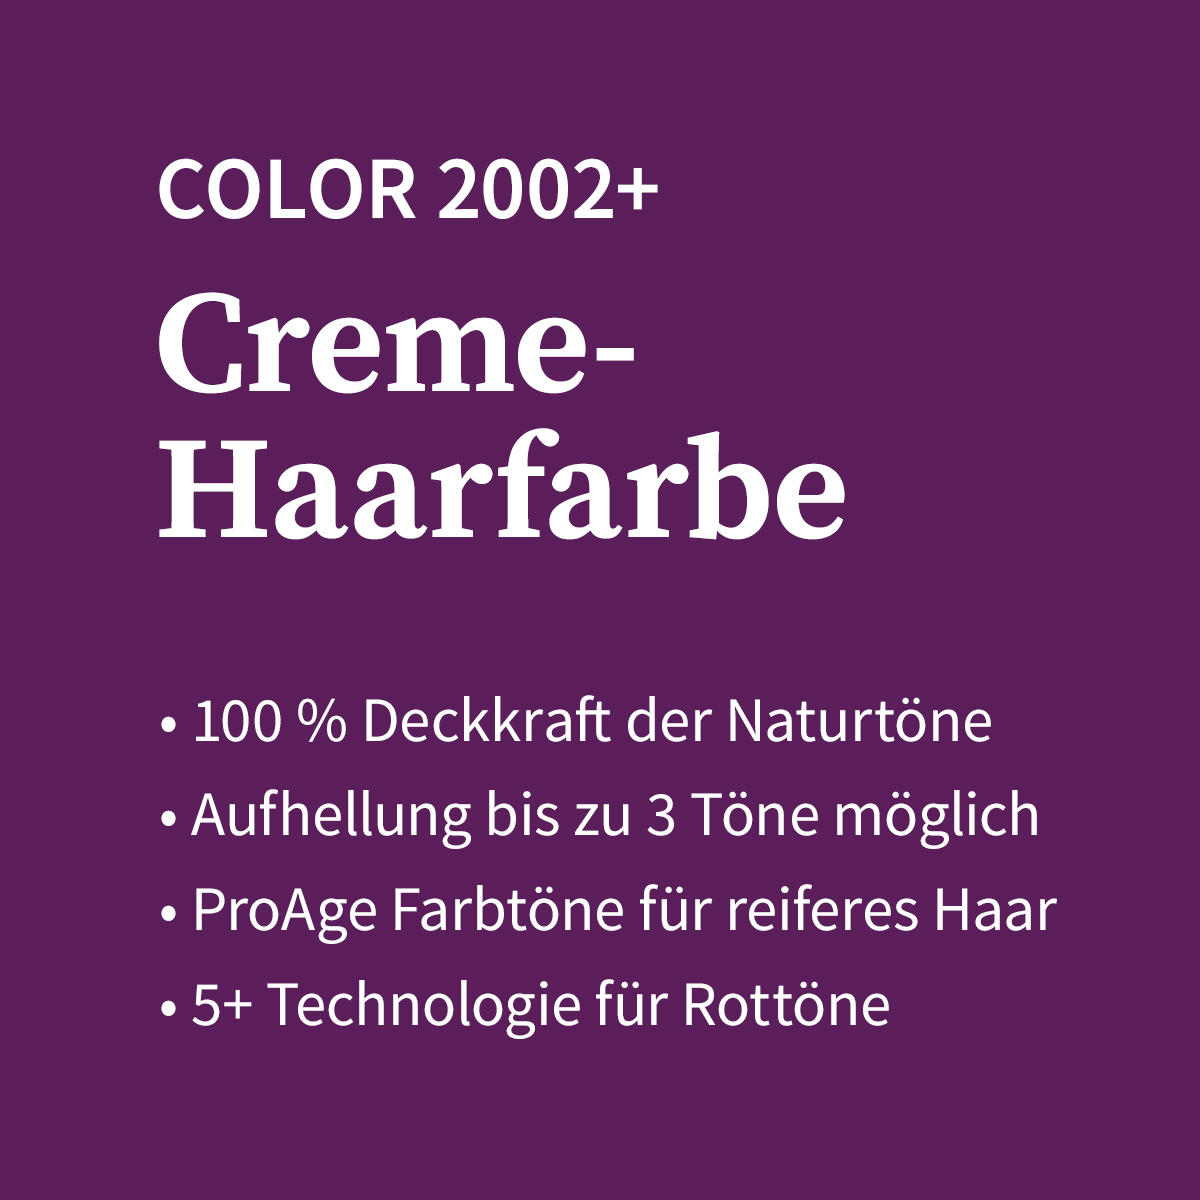 Basler Color 2002+ Cremehaarfarbe 8/3 hellblond gold, Tube 60 ml - 4